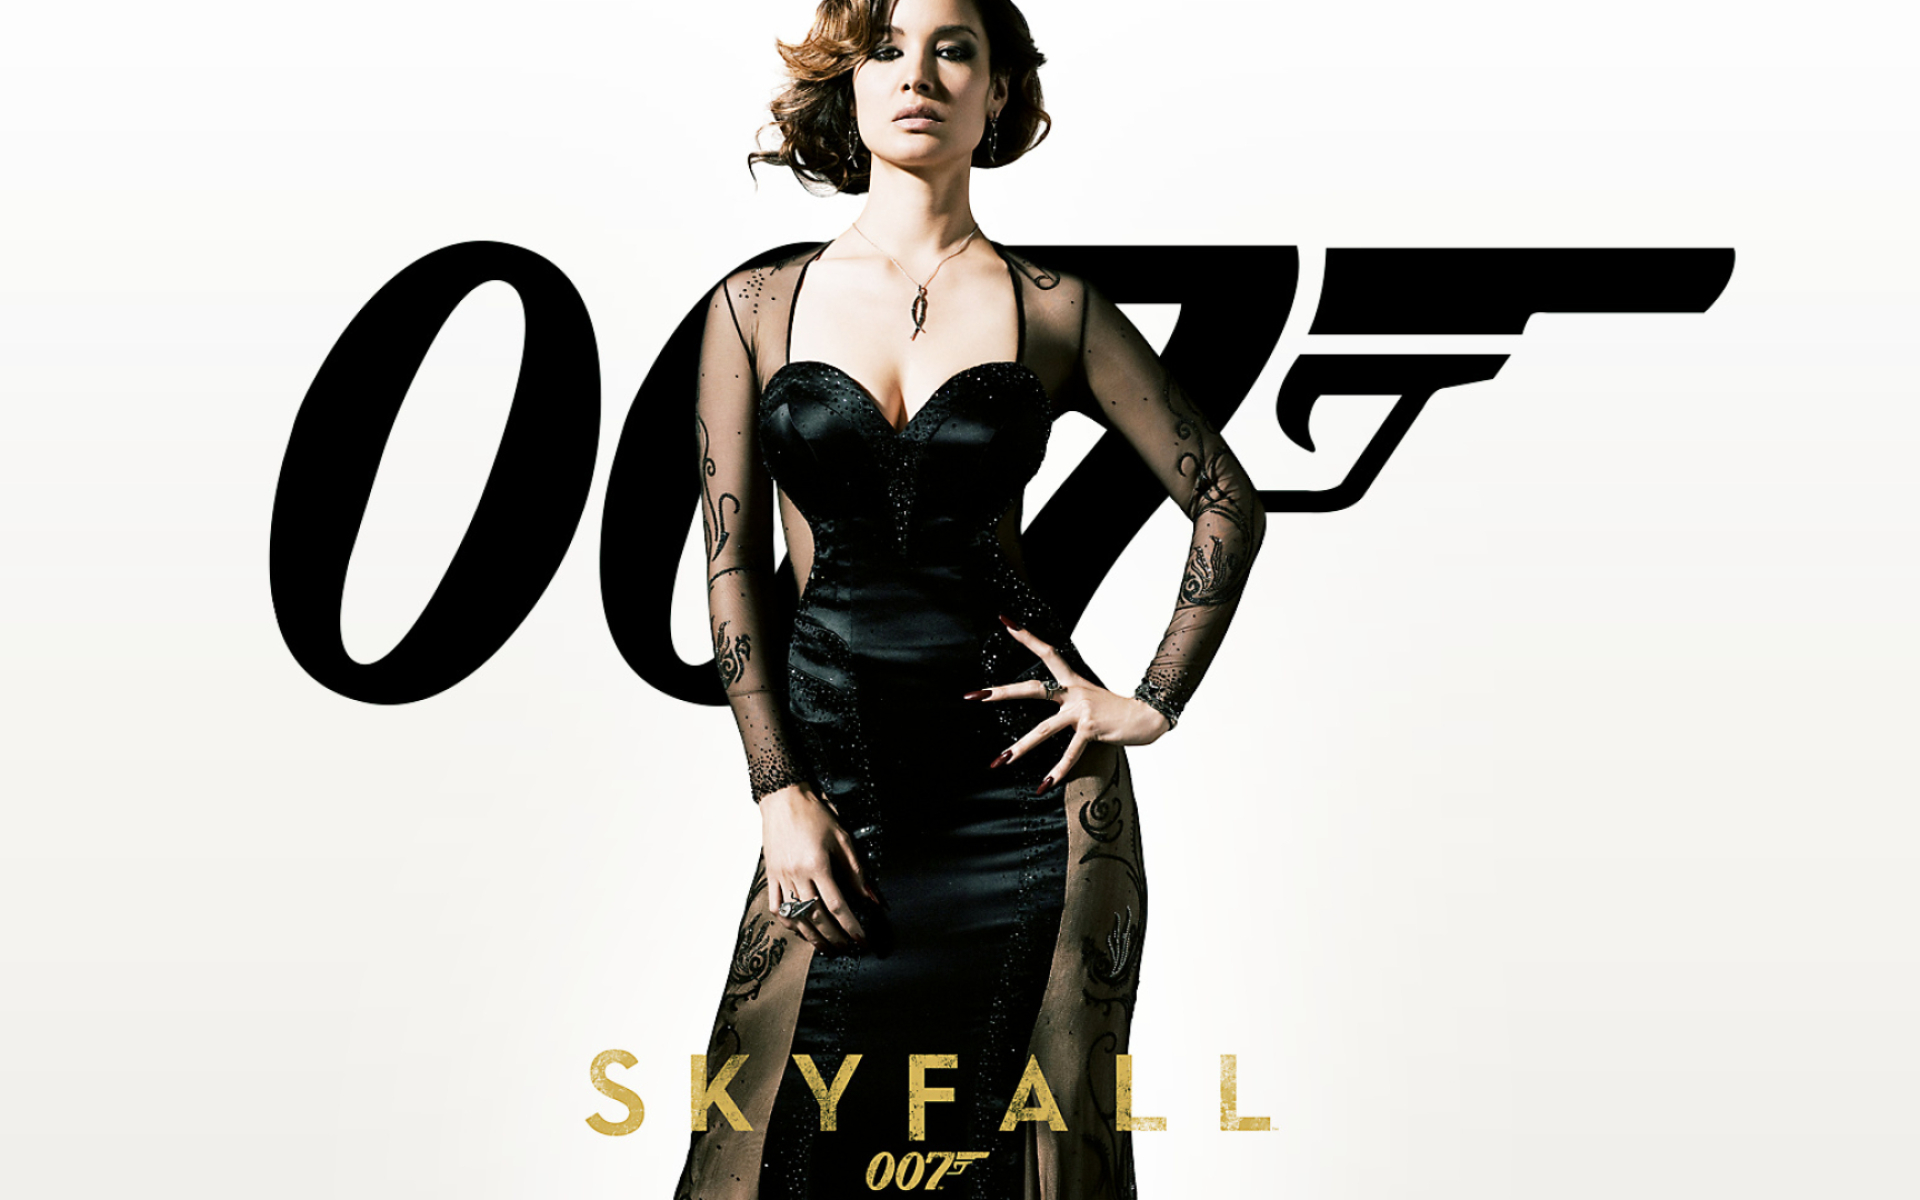 Skyfall: Berenice Marlohe as Severine, Bond girl. 1920x1200 HD Wallpaper.